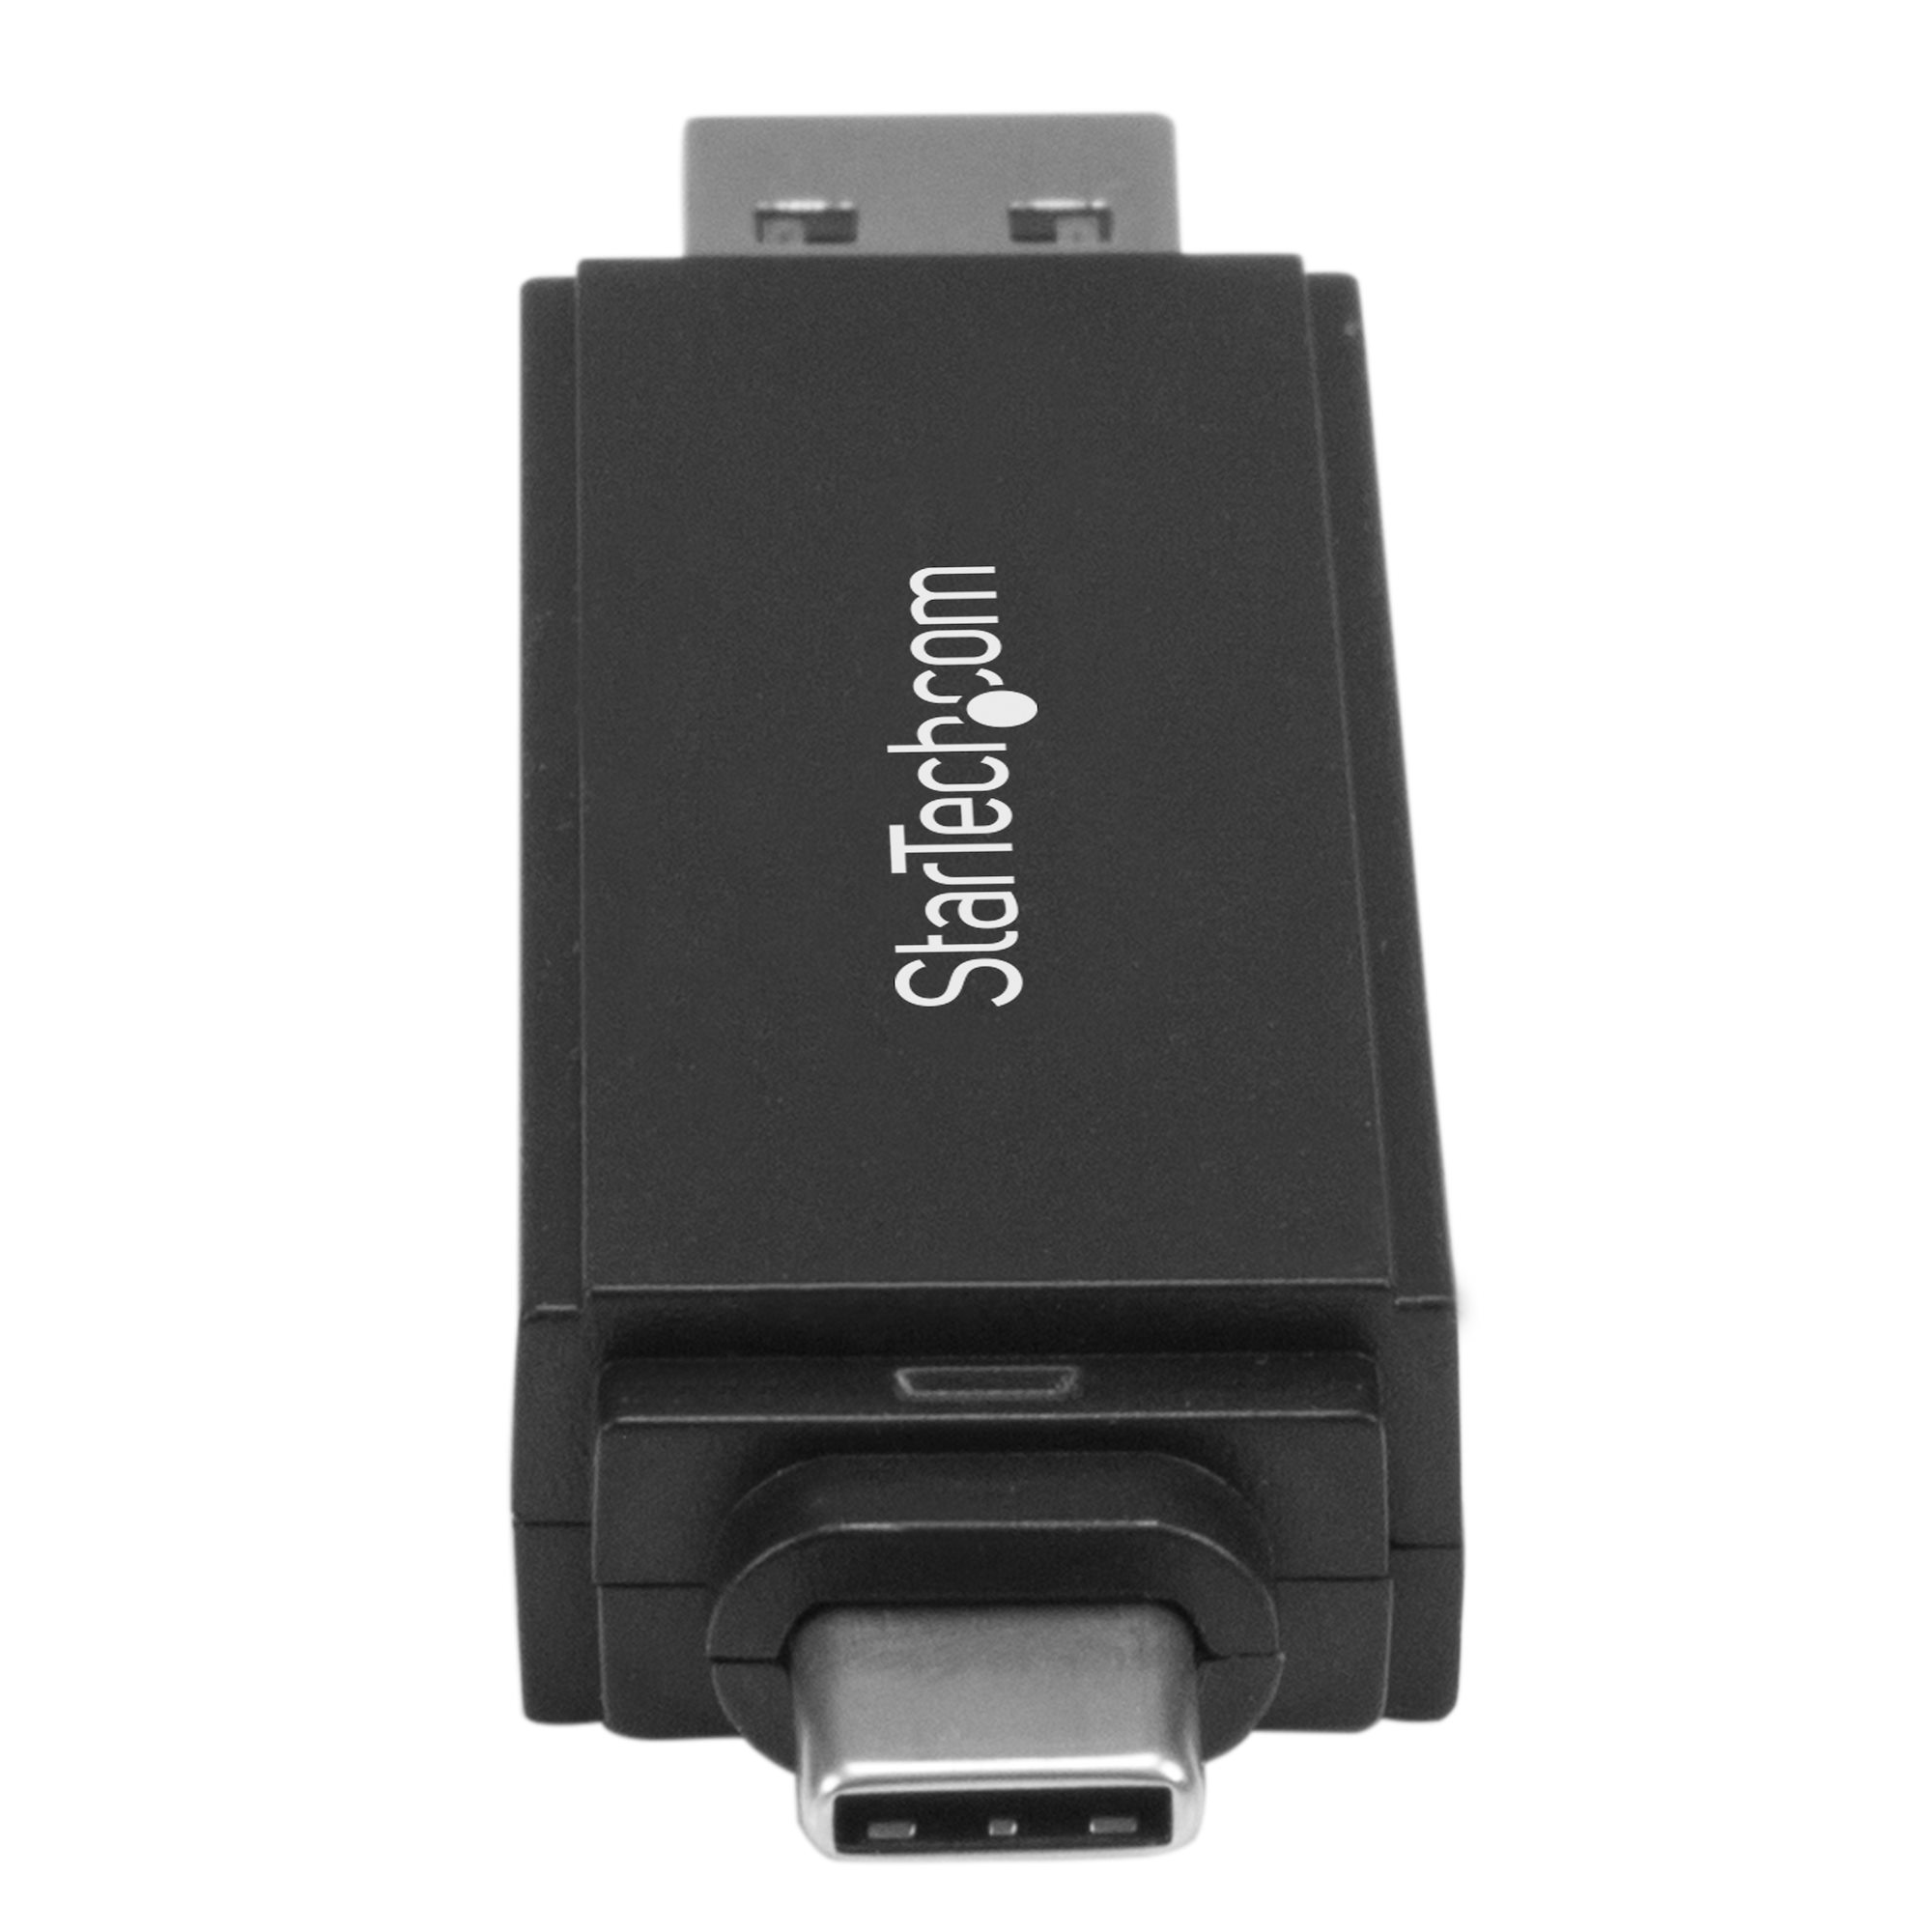 microSD USB Reader - COM-13004 - SparkFun Electronics